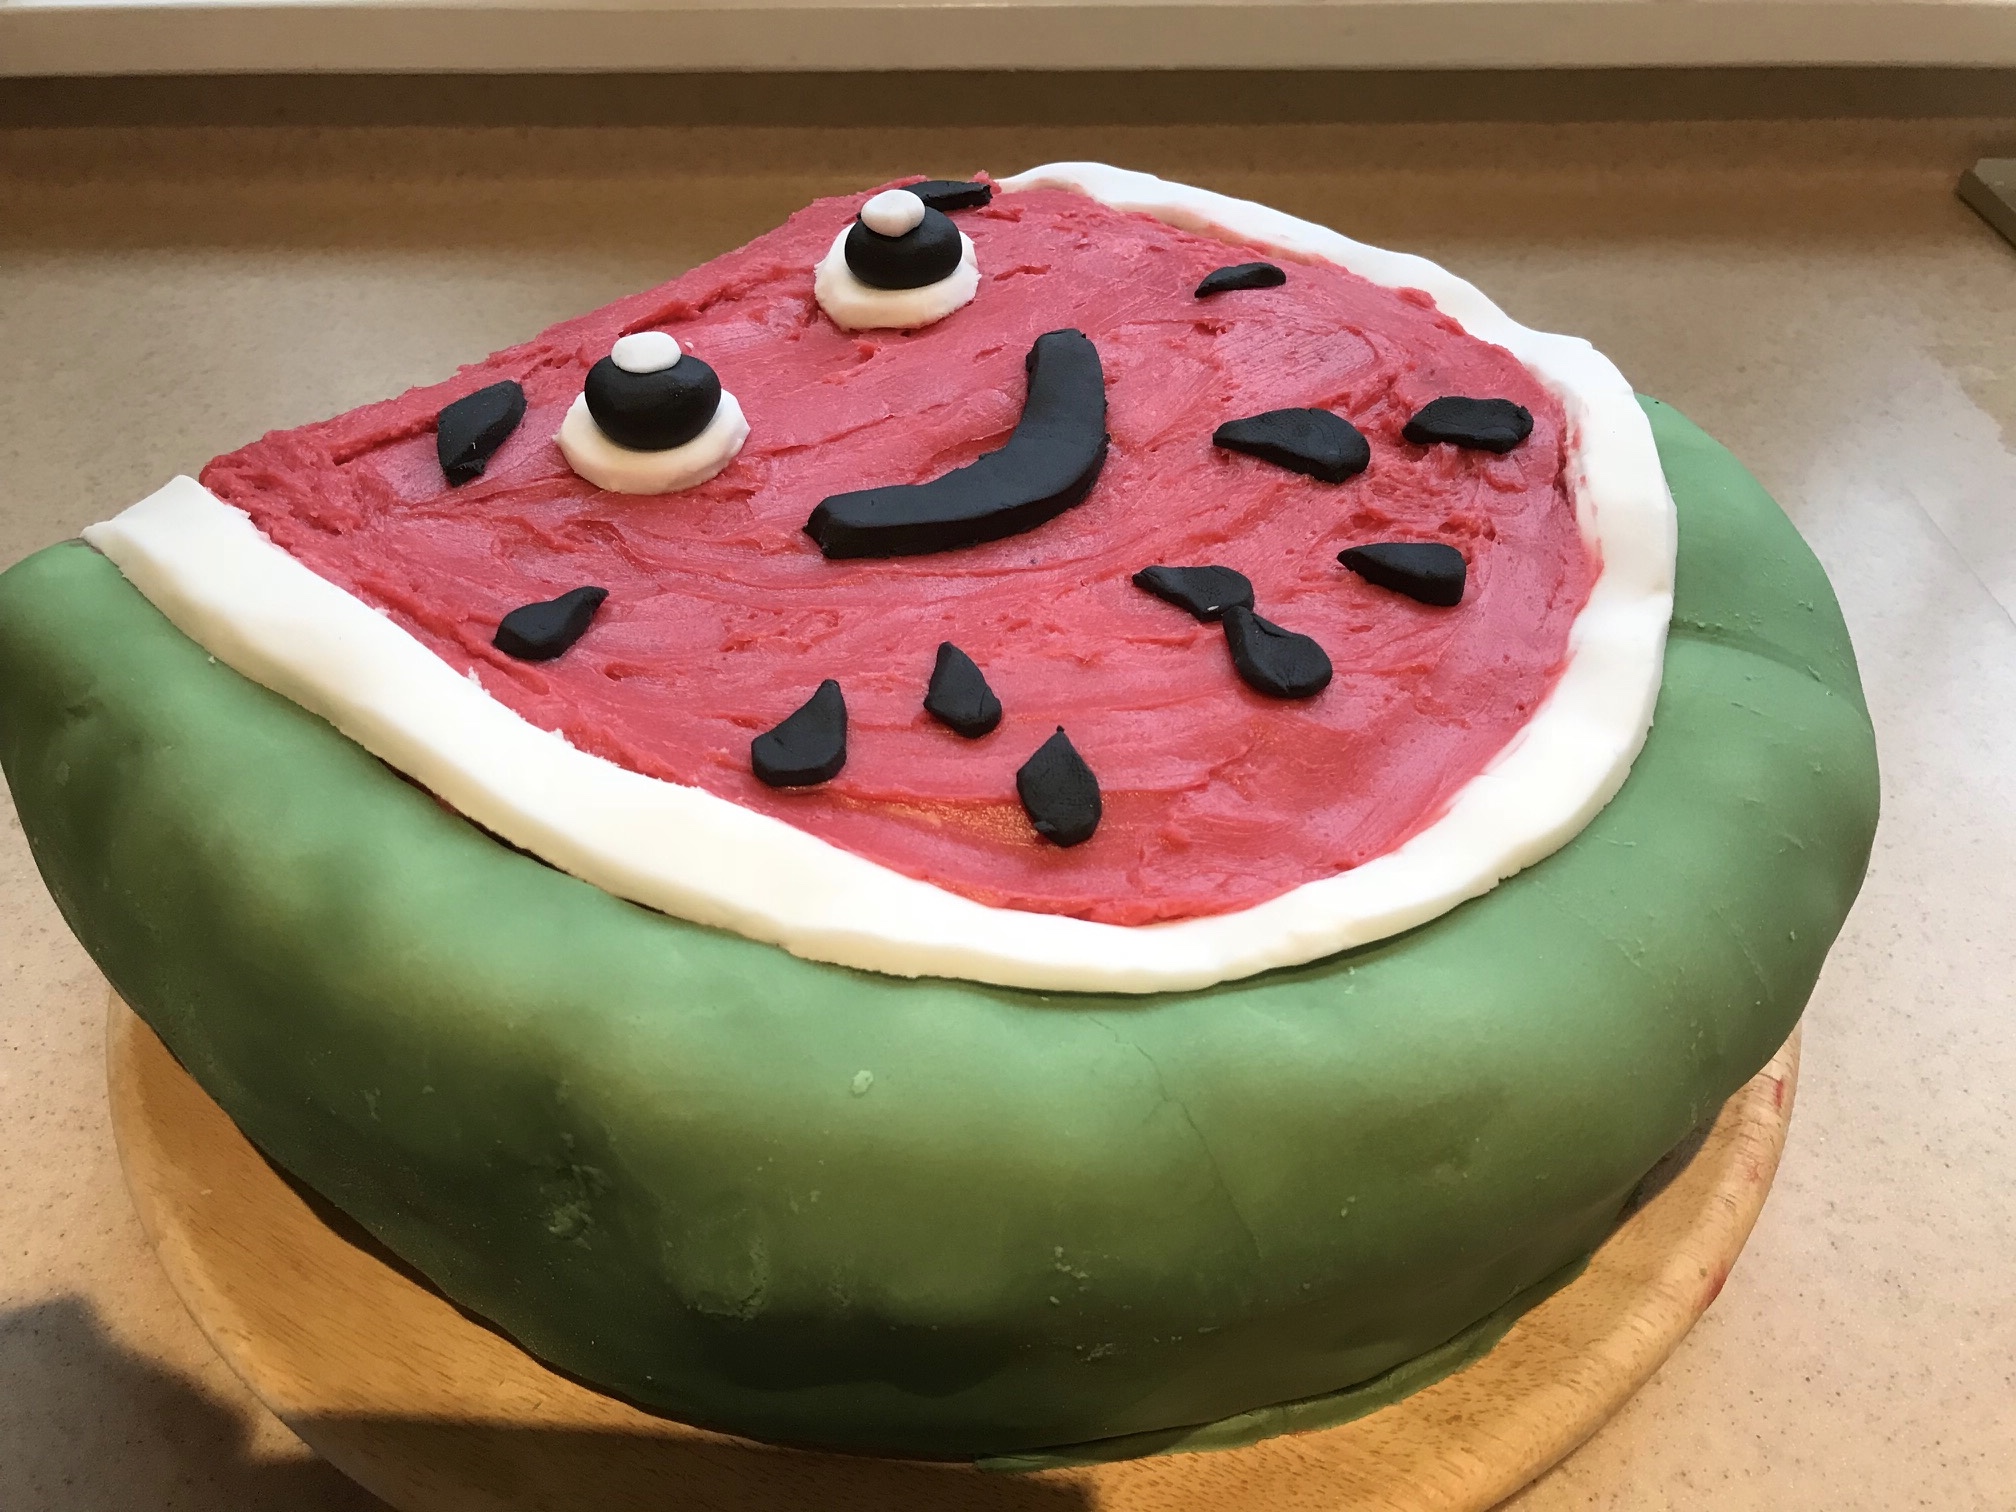 Watermelon cake - Decorated Cake by Casper cake - CakesDecor